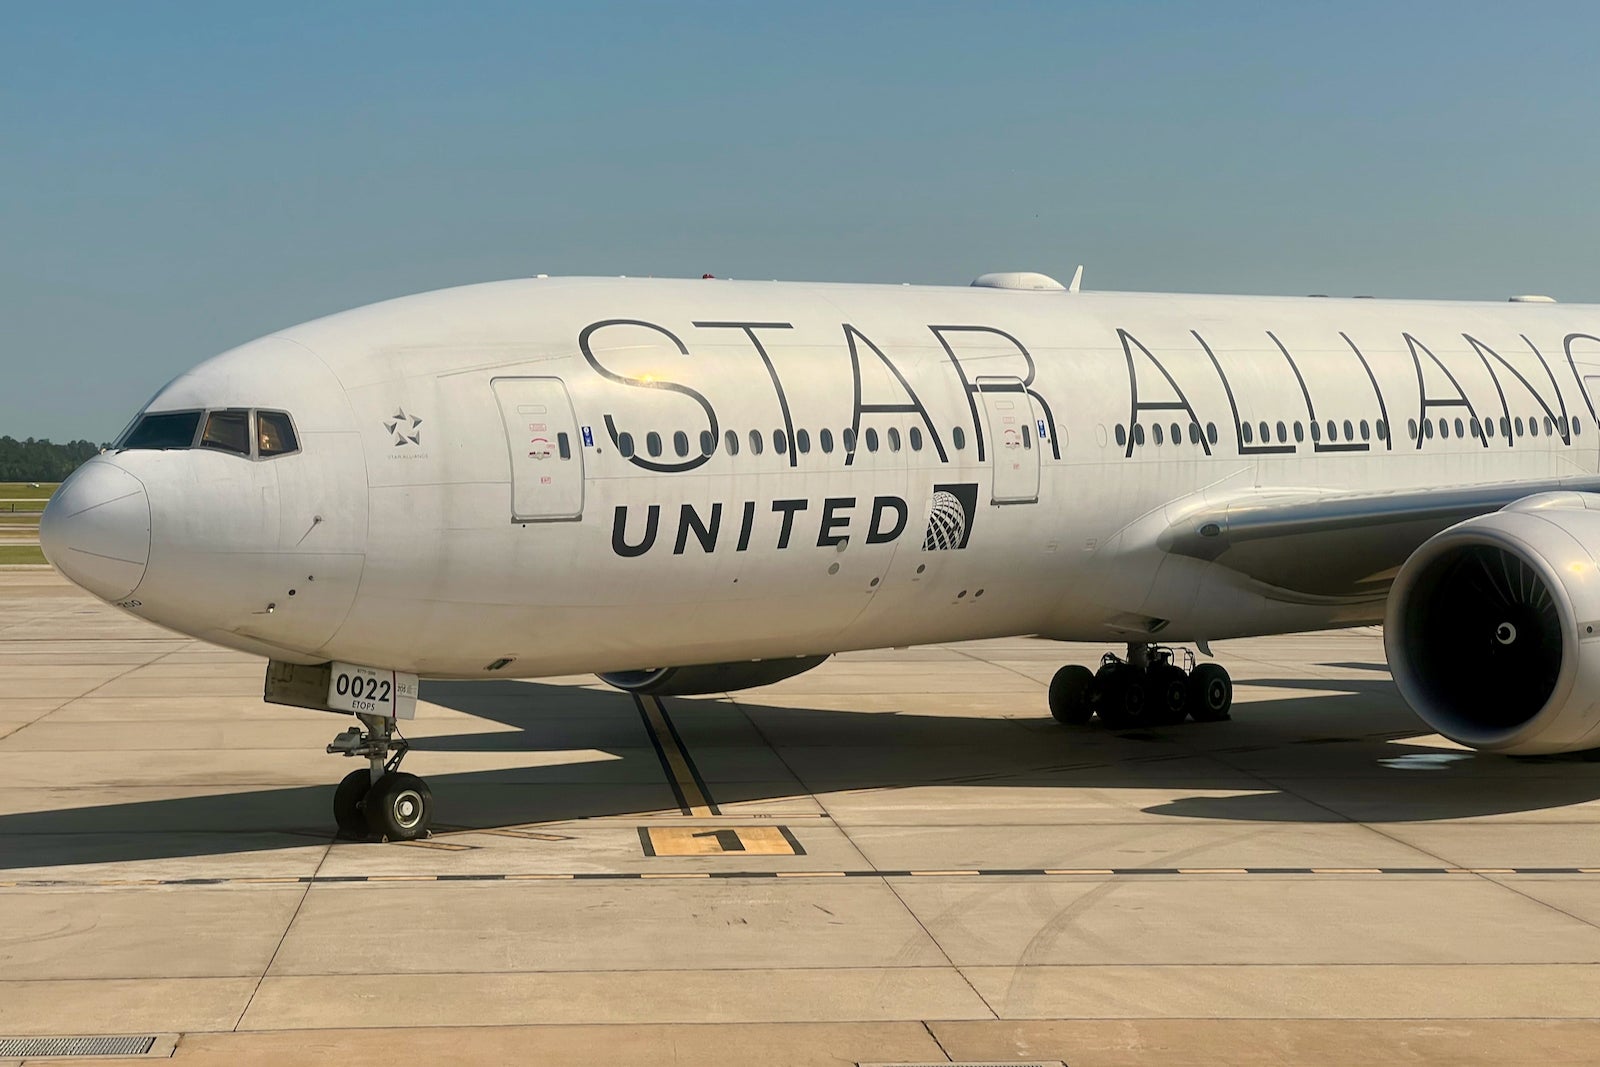 Turf war: United puts biggest jet on new San Diego flight after Alaska unveils new route